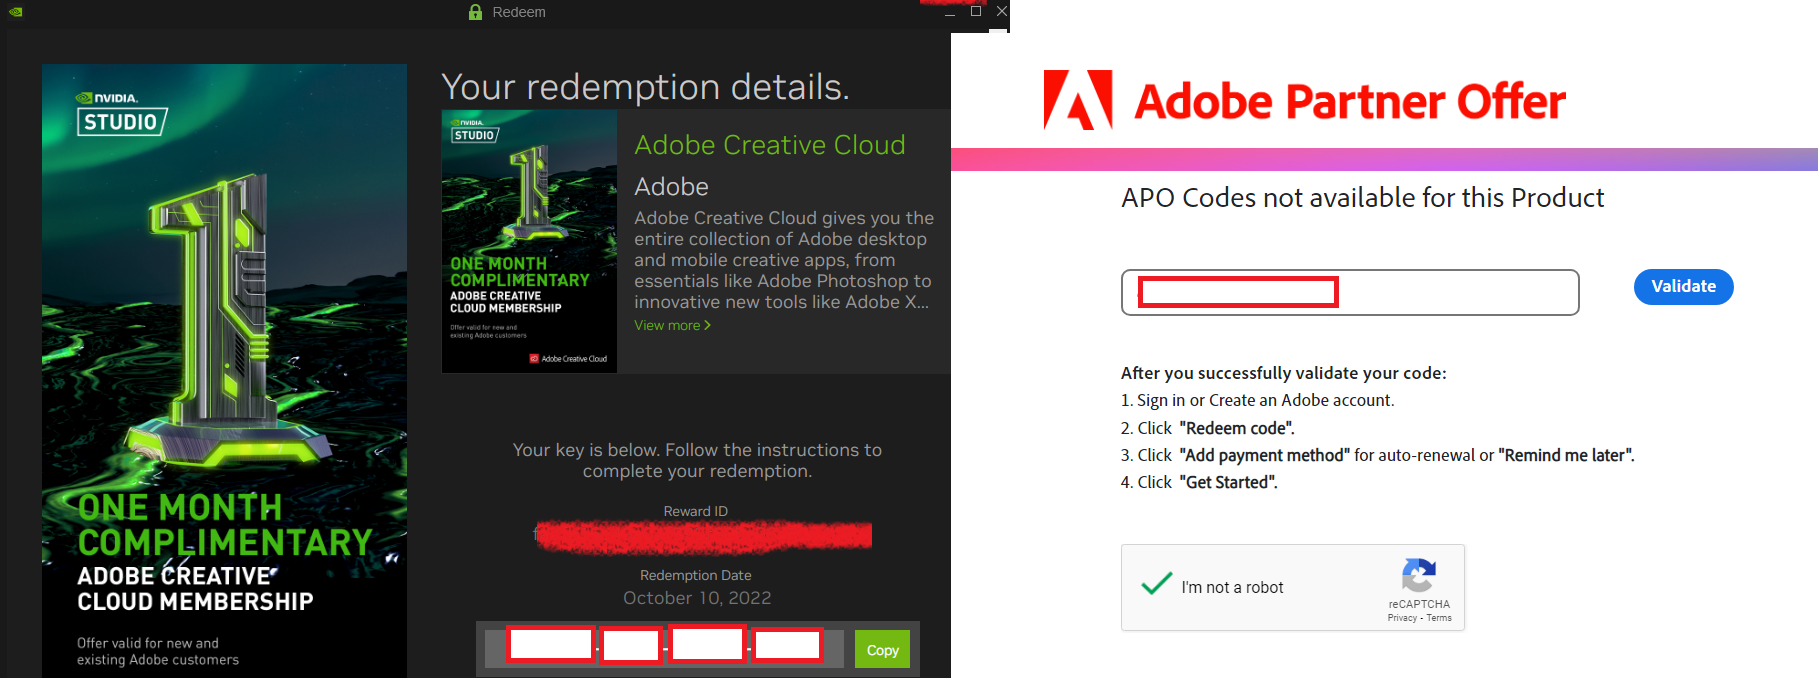 i got a free month of adobe creative cloud but i d... - Adobe Support  Community - 13254671